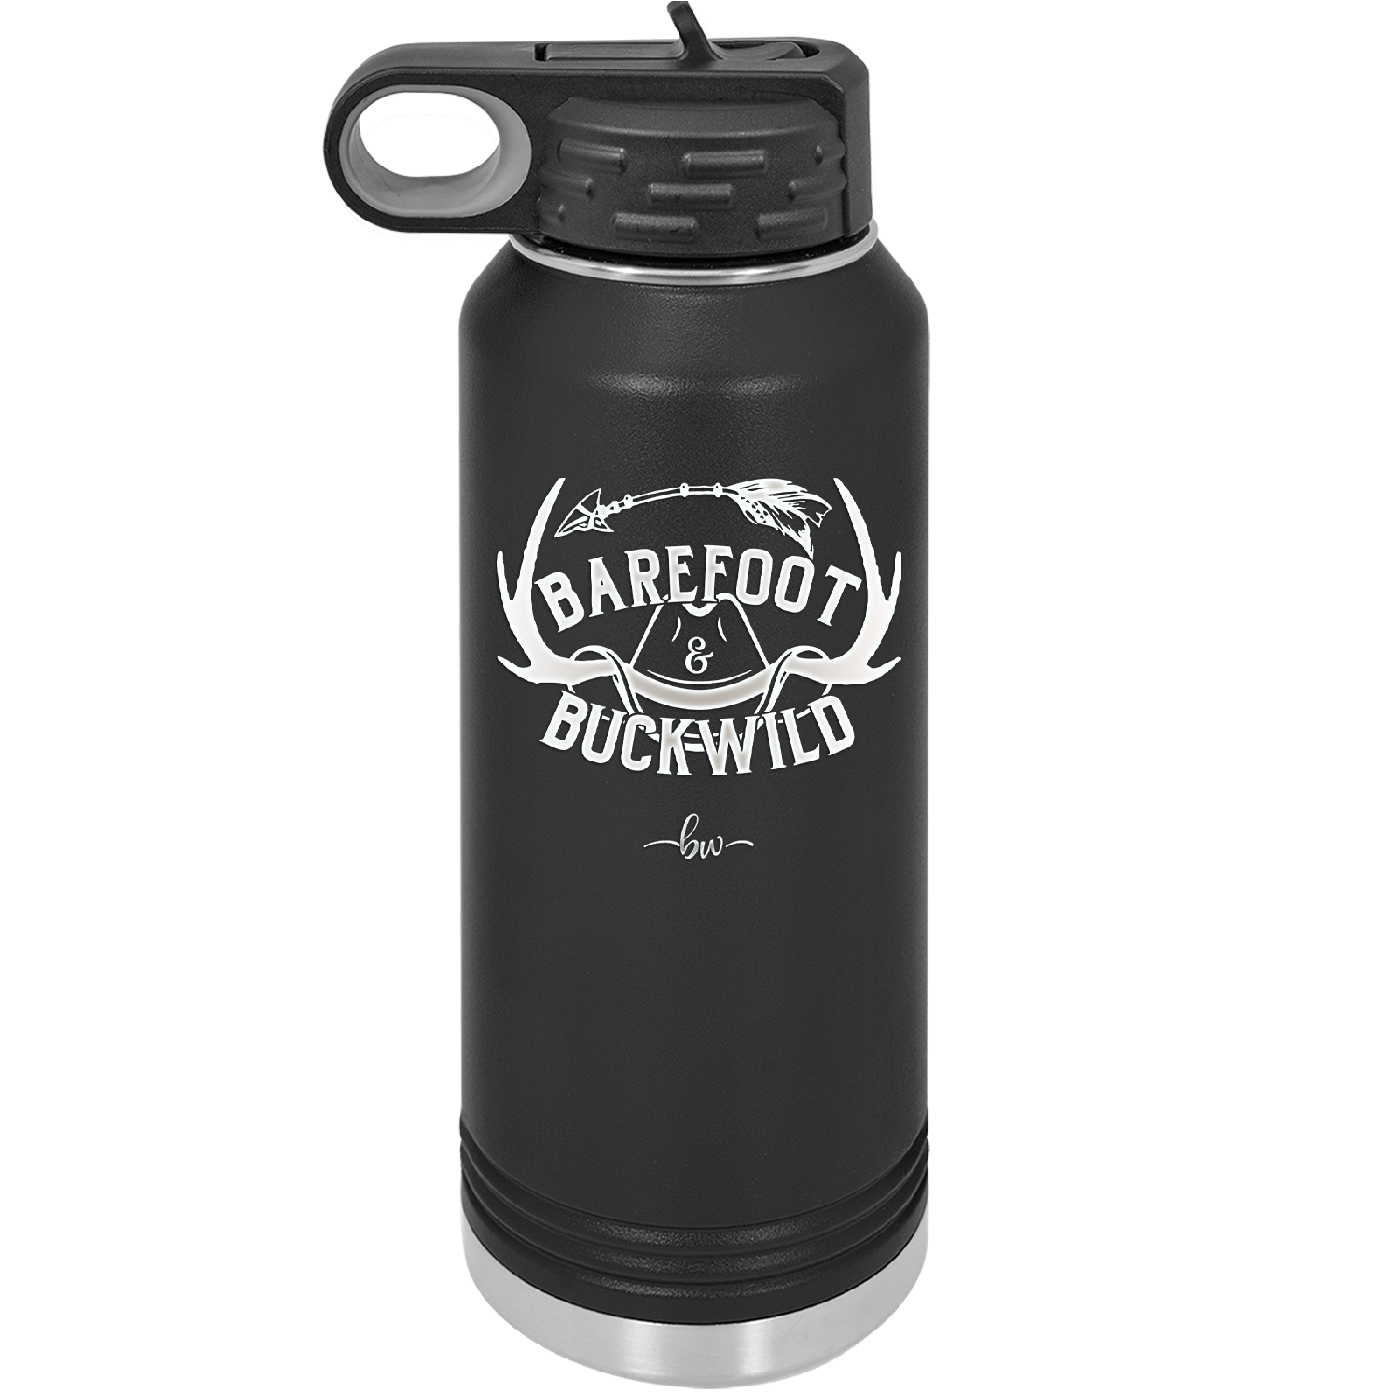 Barefoot and Buckwild - Laser Engraved Stainless Steel Drinkware - 2104 -